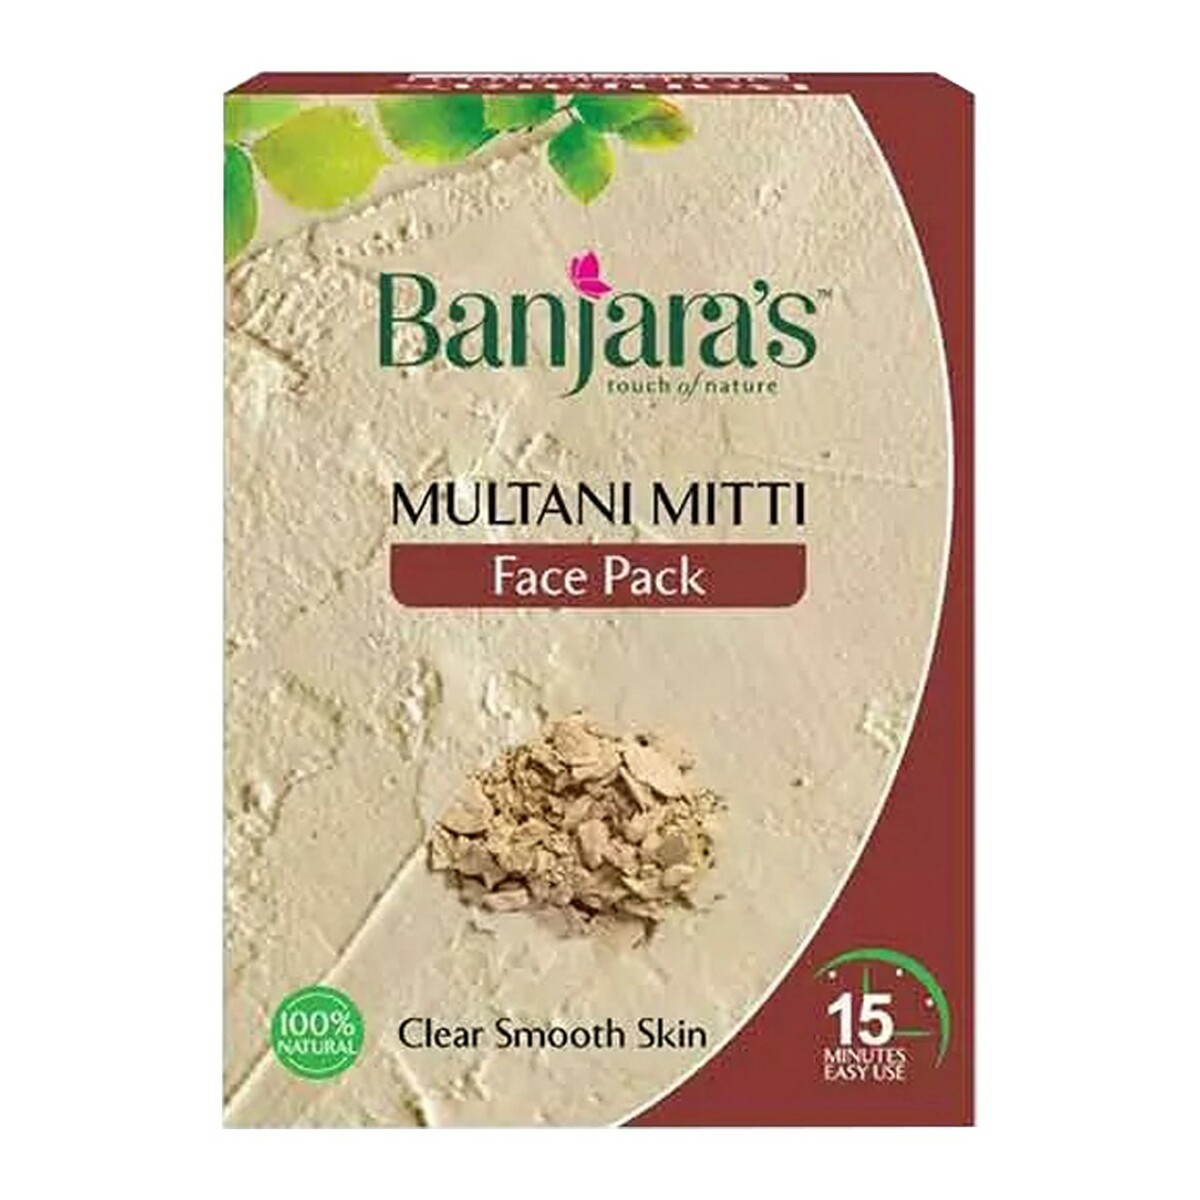 Banjaras Face Pack Multani Mitti 100g